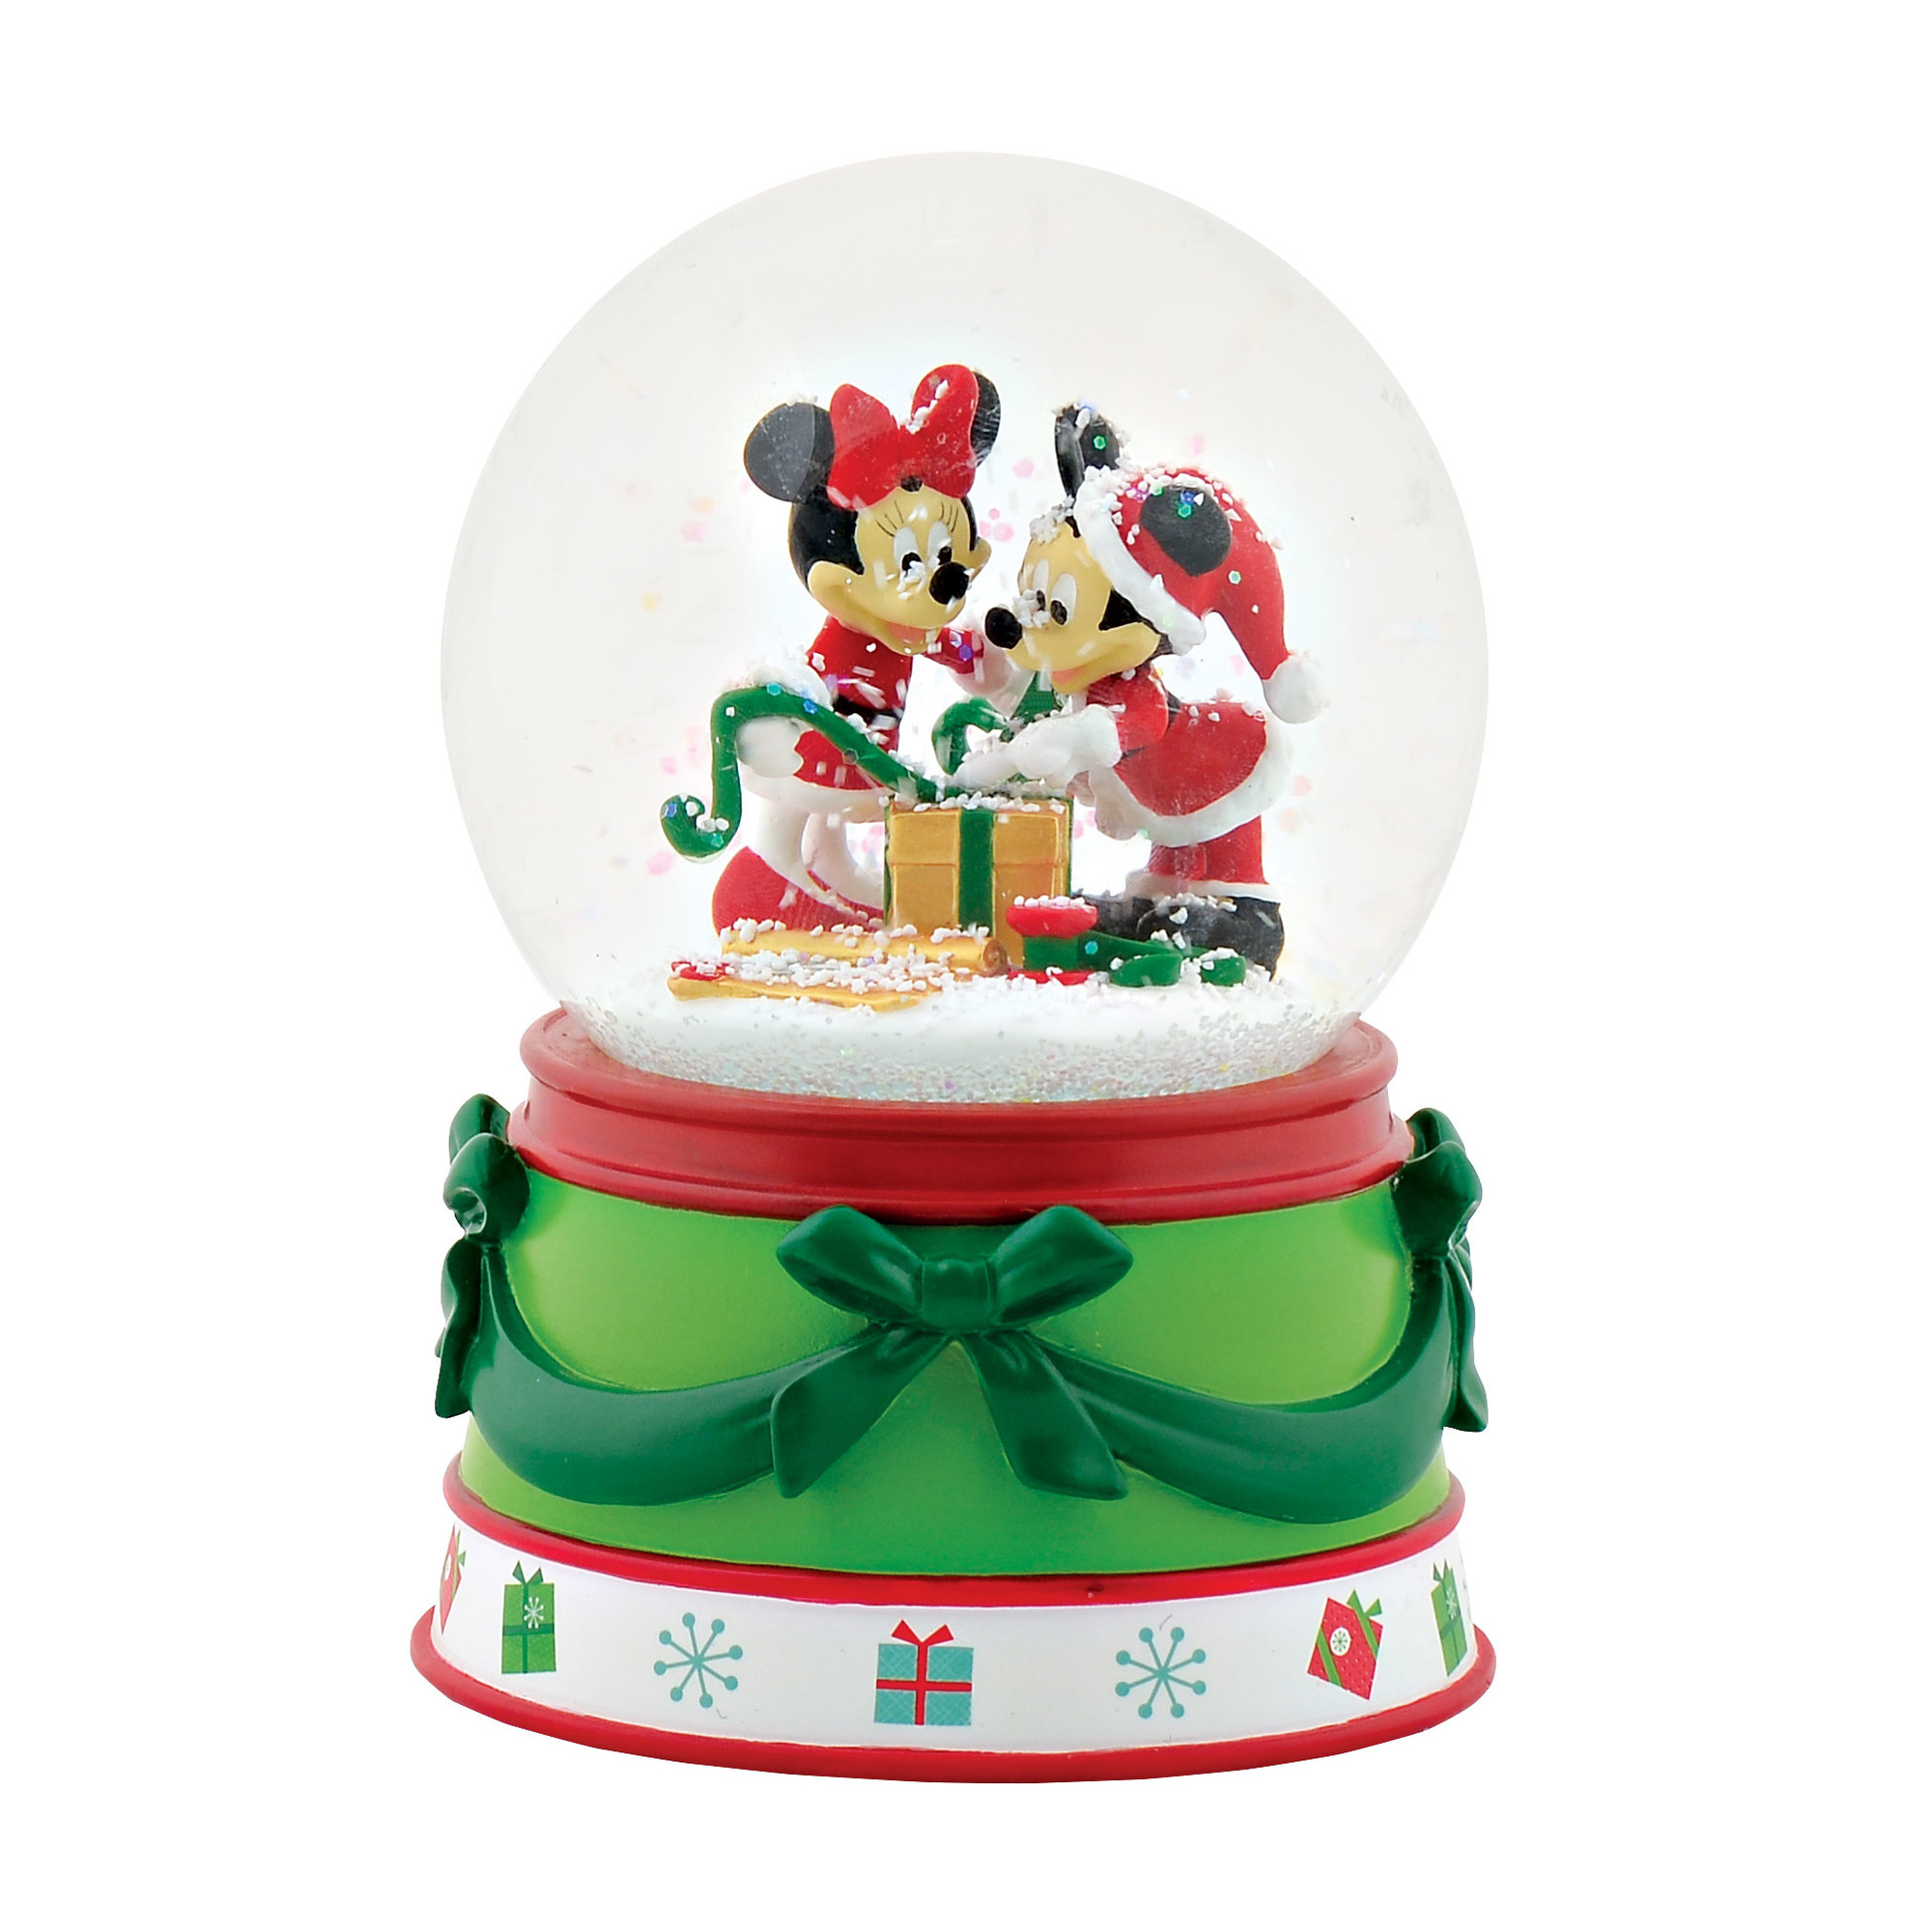 Department 56 Disney Mickey & Minnie Mouse Snow Globe